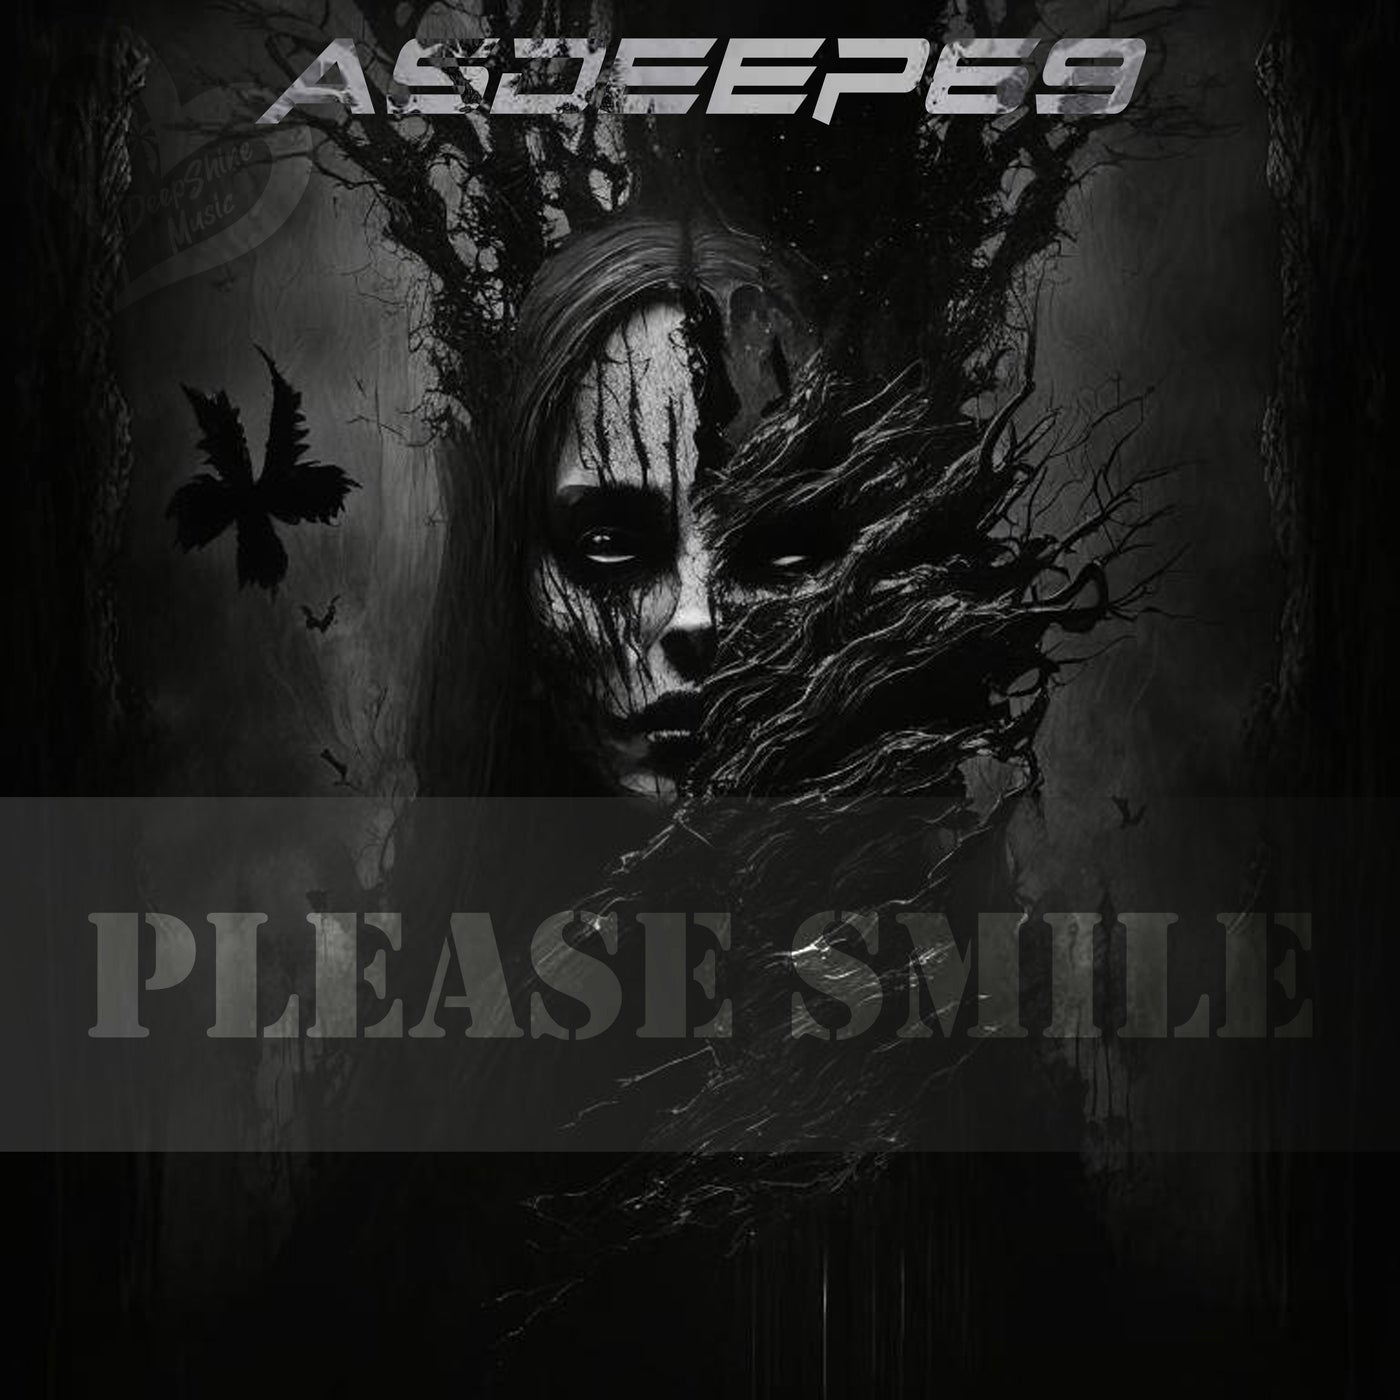 Please Smile